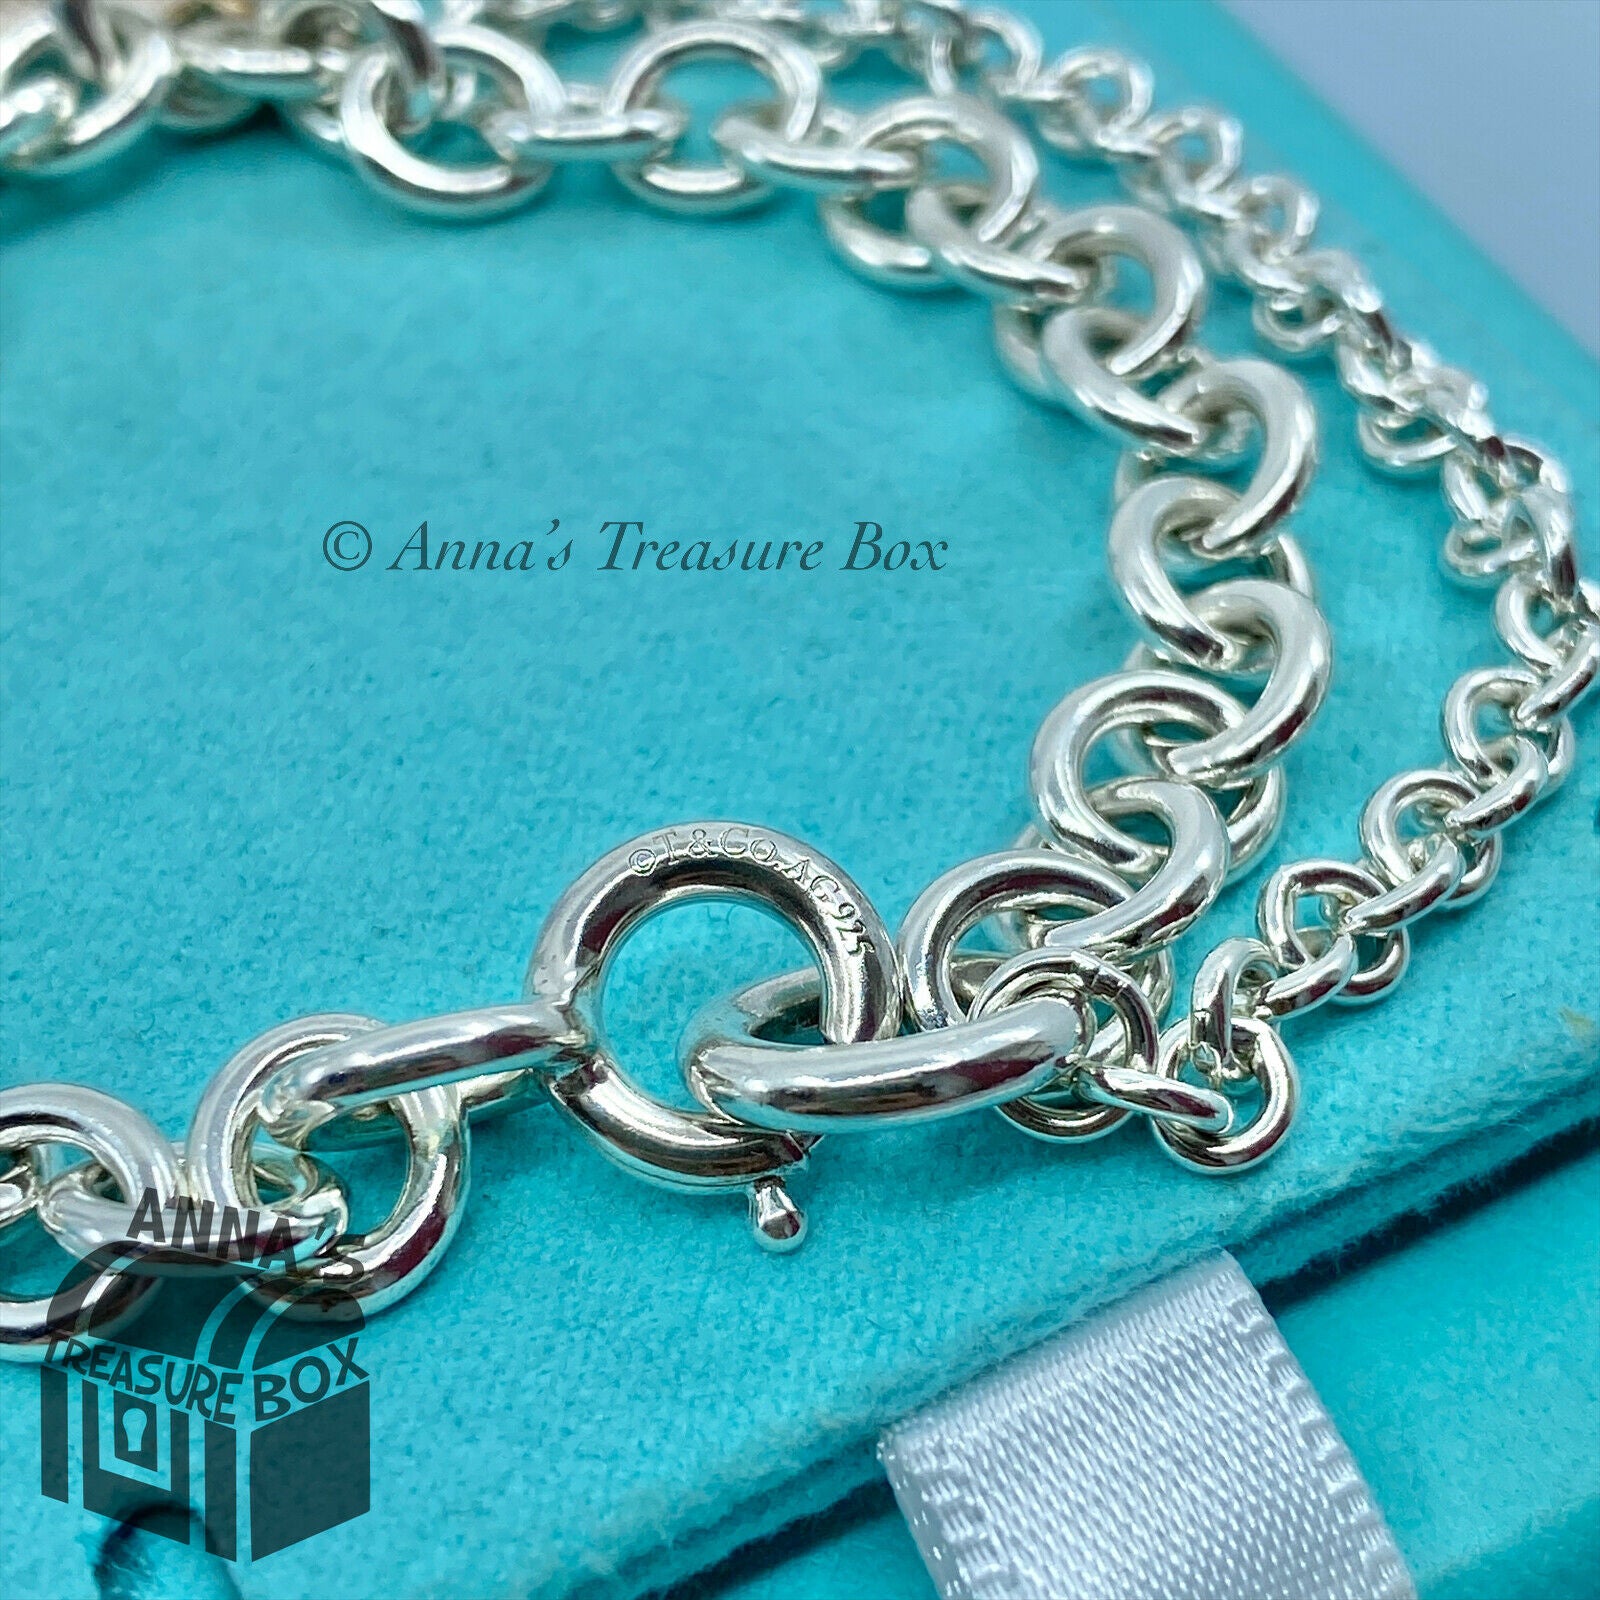 Tiffany & Co. Heart Tag Charm Round Link Charm Bracelet Size